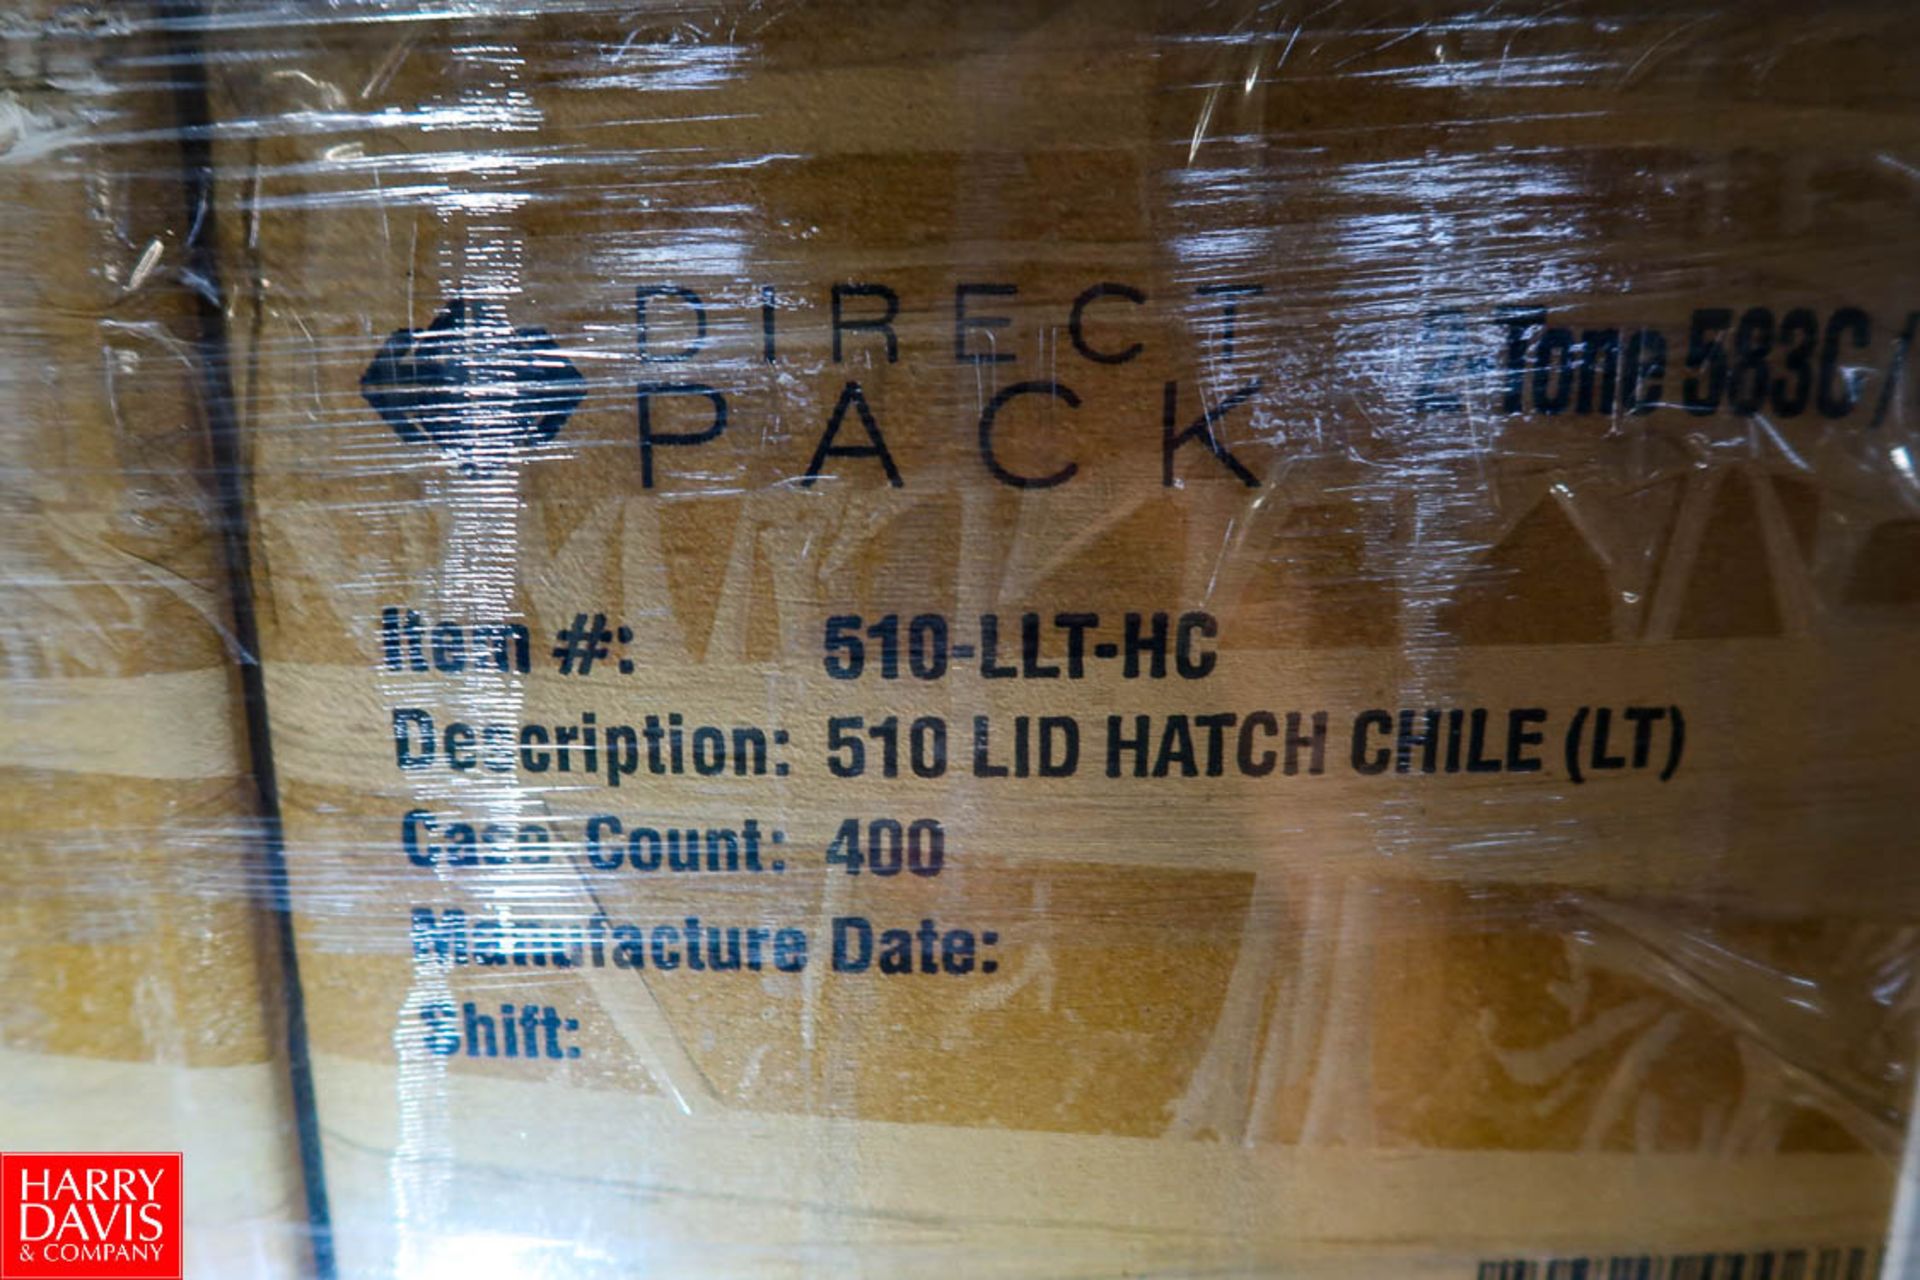 (171) Direct Pack 510 Hatch Chile (LT) Lids Model: 510-LLT-HC, 400 Units Per Case. - Image 2 of 2